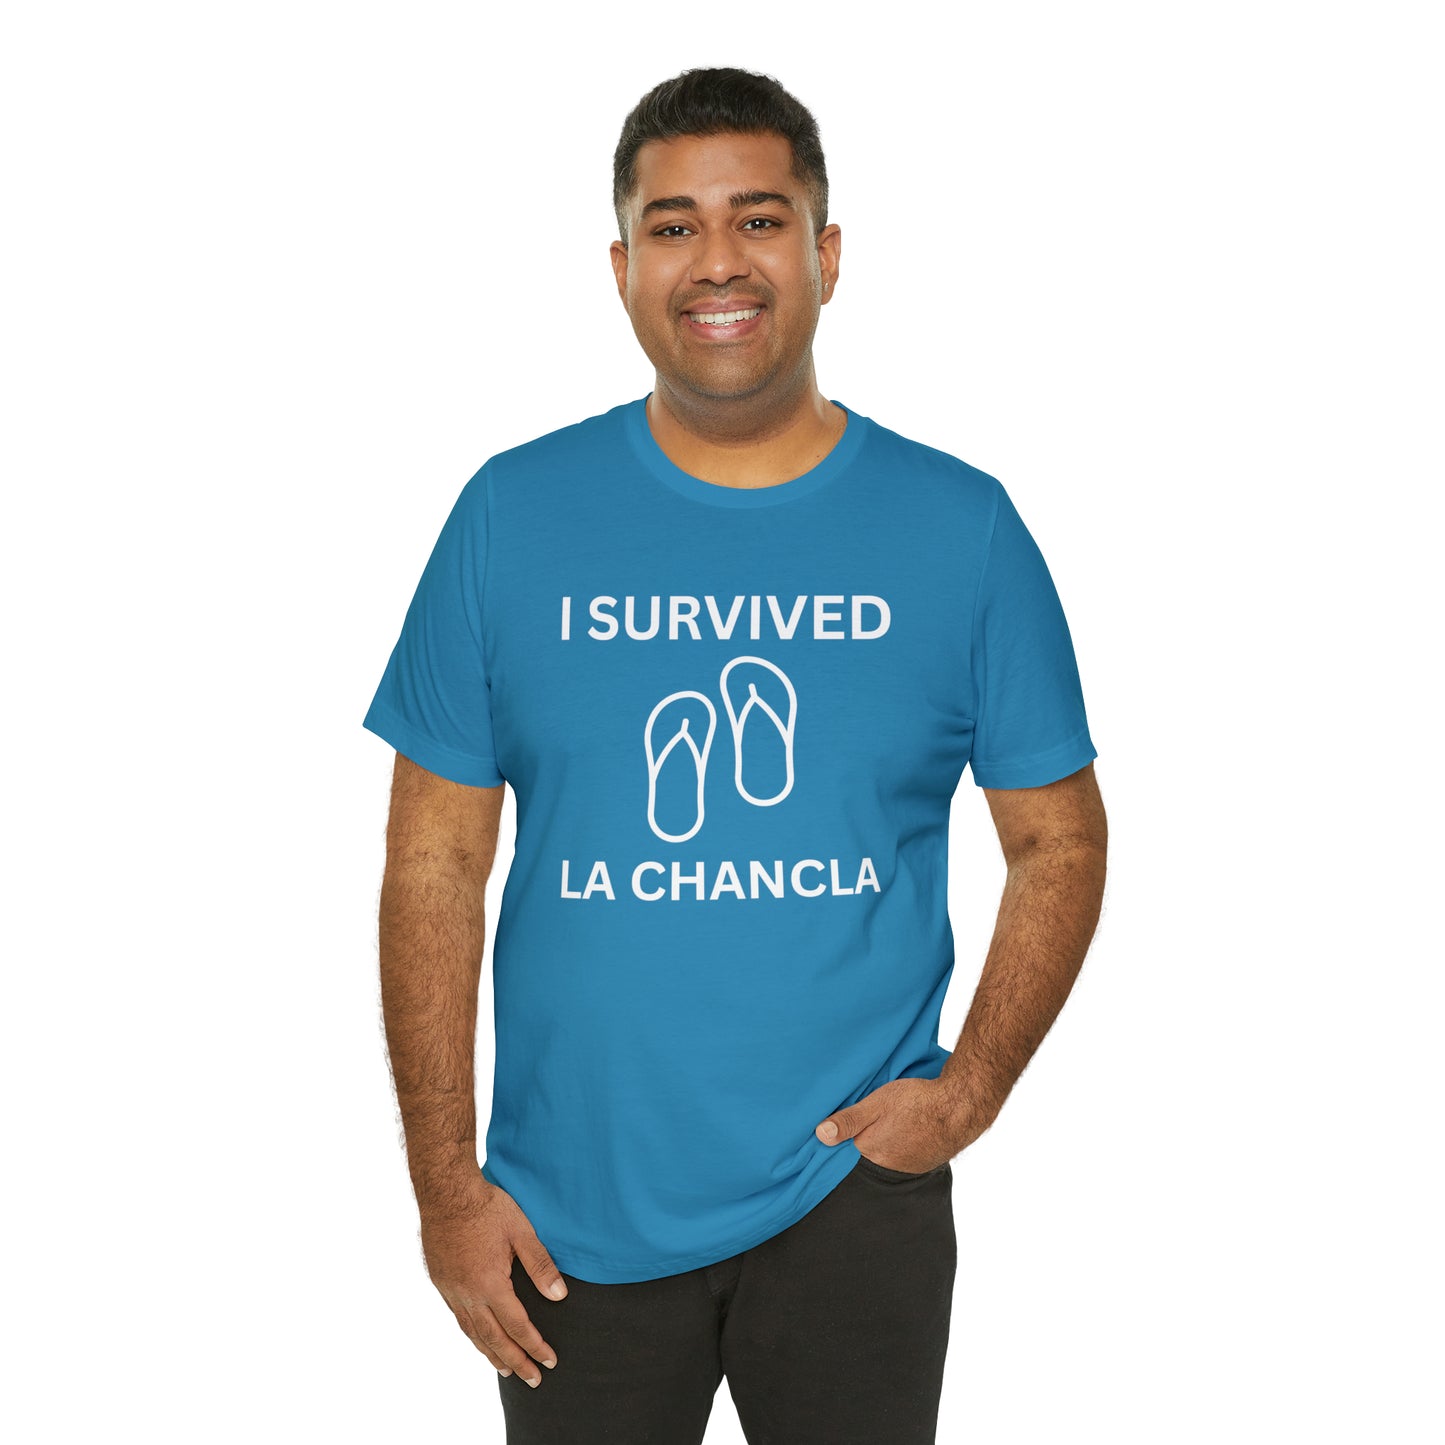 I Survived La Chancla, Shirt